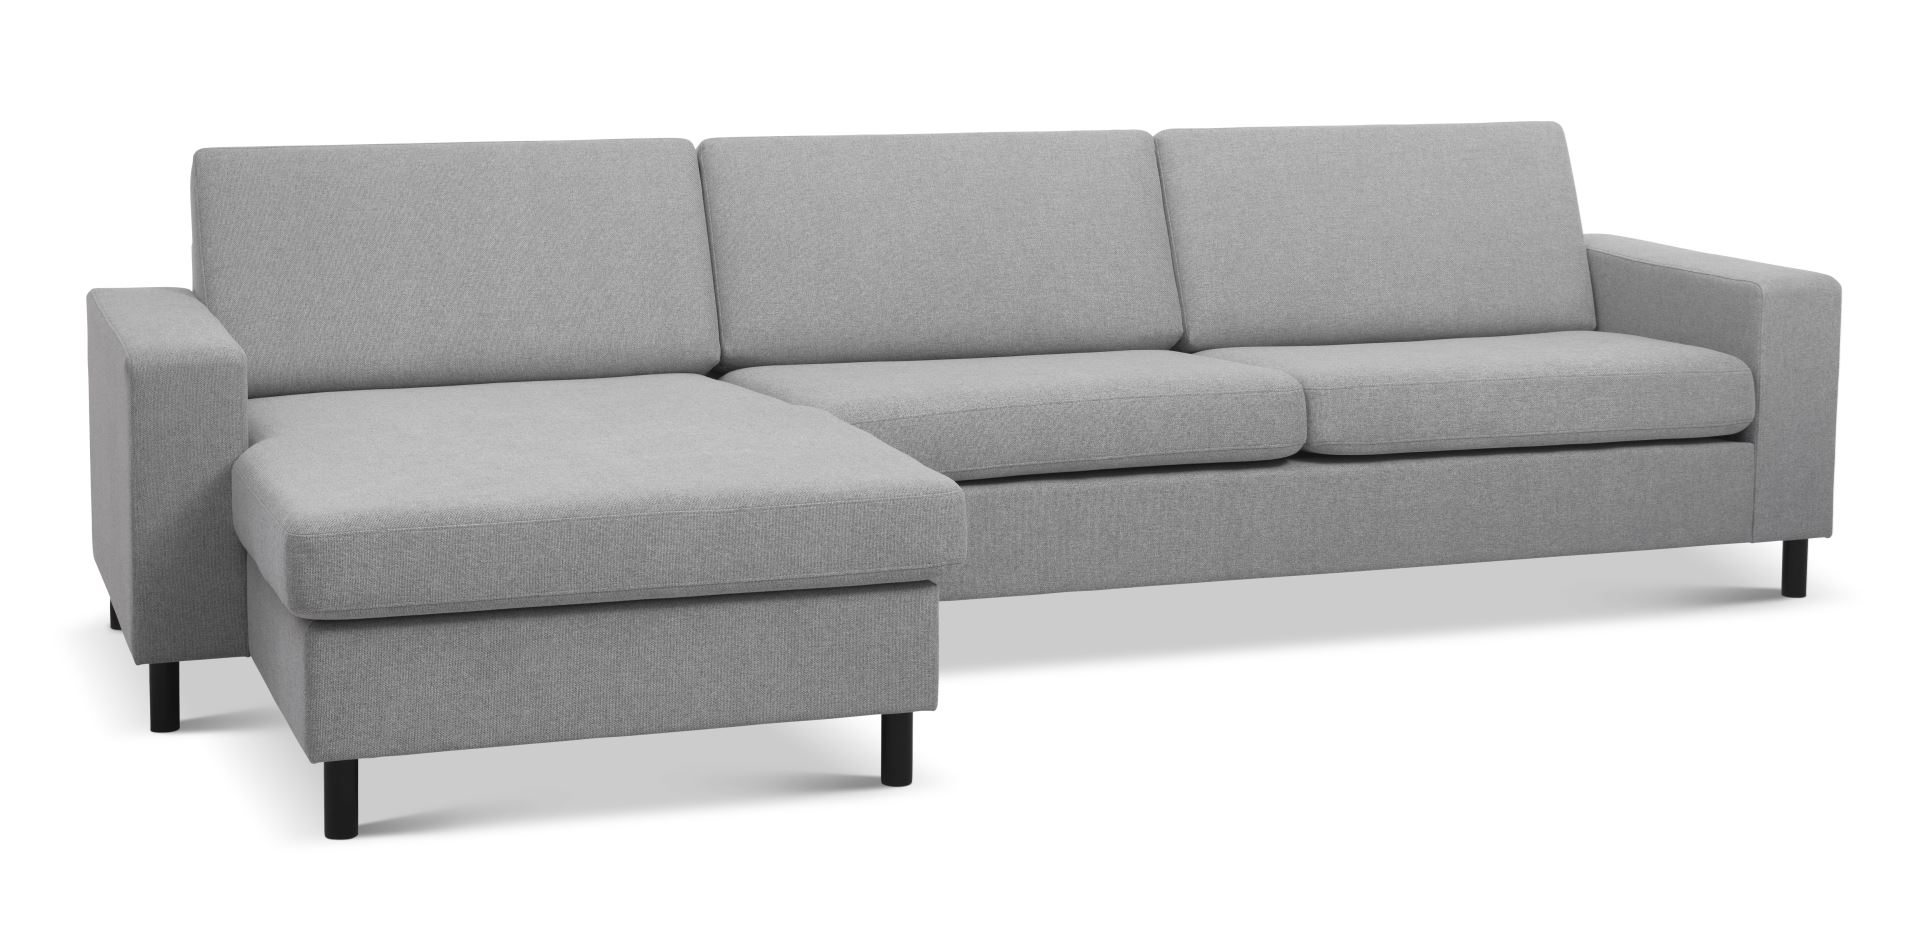 Pan set 8 3D XL sofa, m. chaiselong - grå polyester stof og sort træ